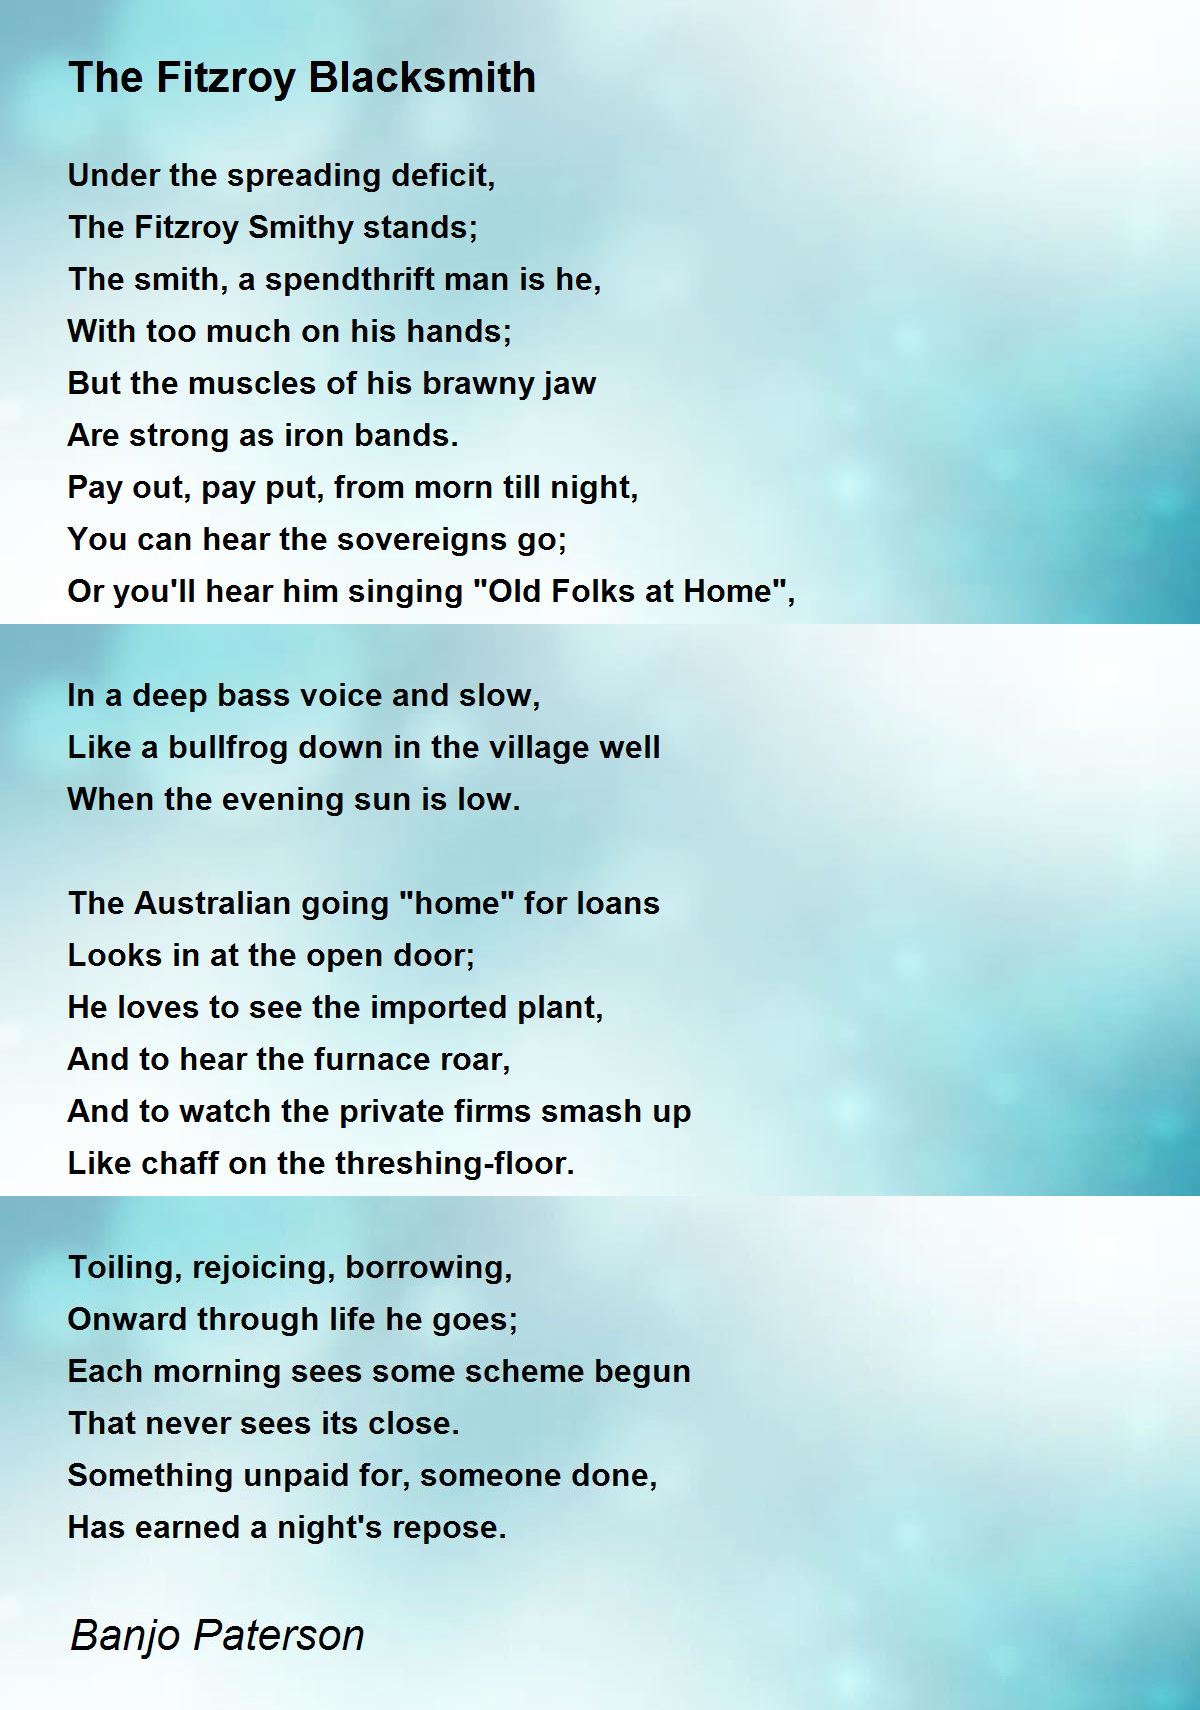 The Fitzroy Blacksmith Poem by Banjo Paterson - Poem Hunter